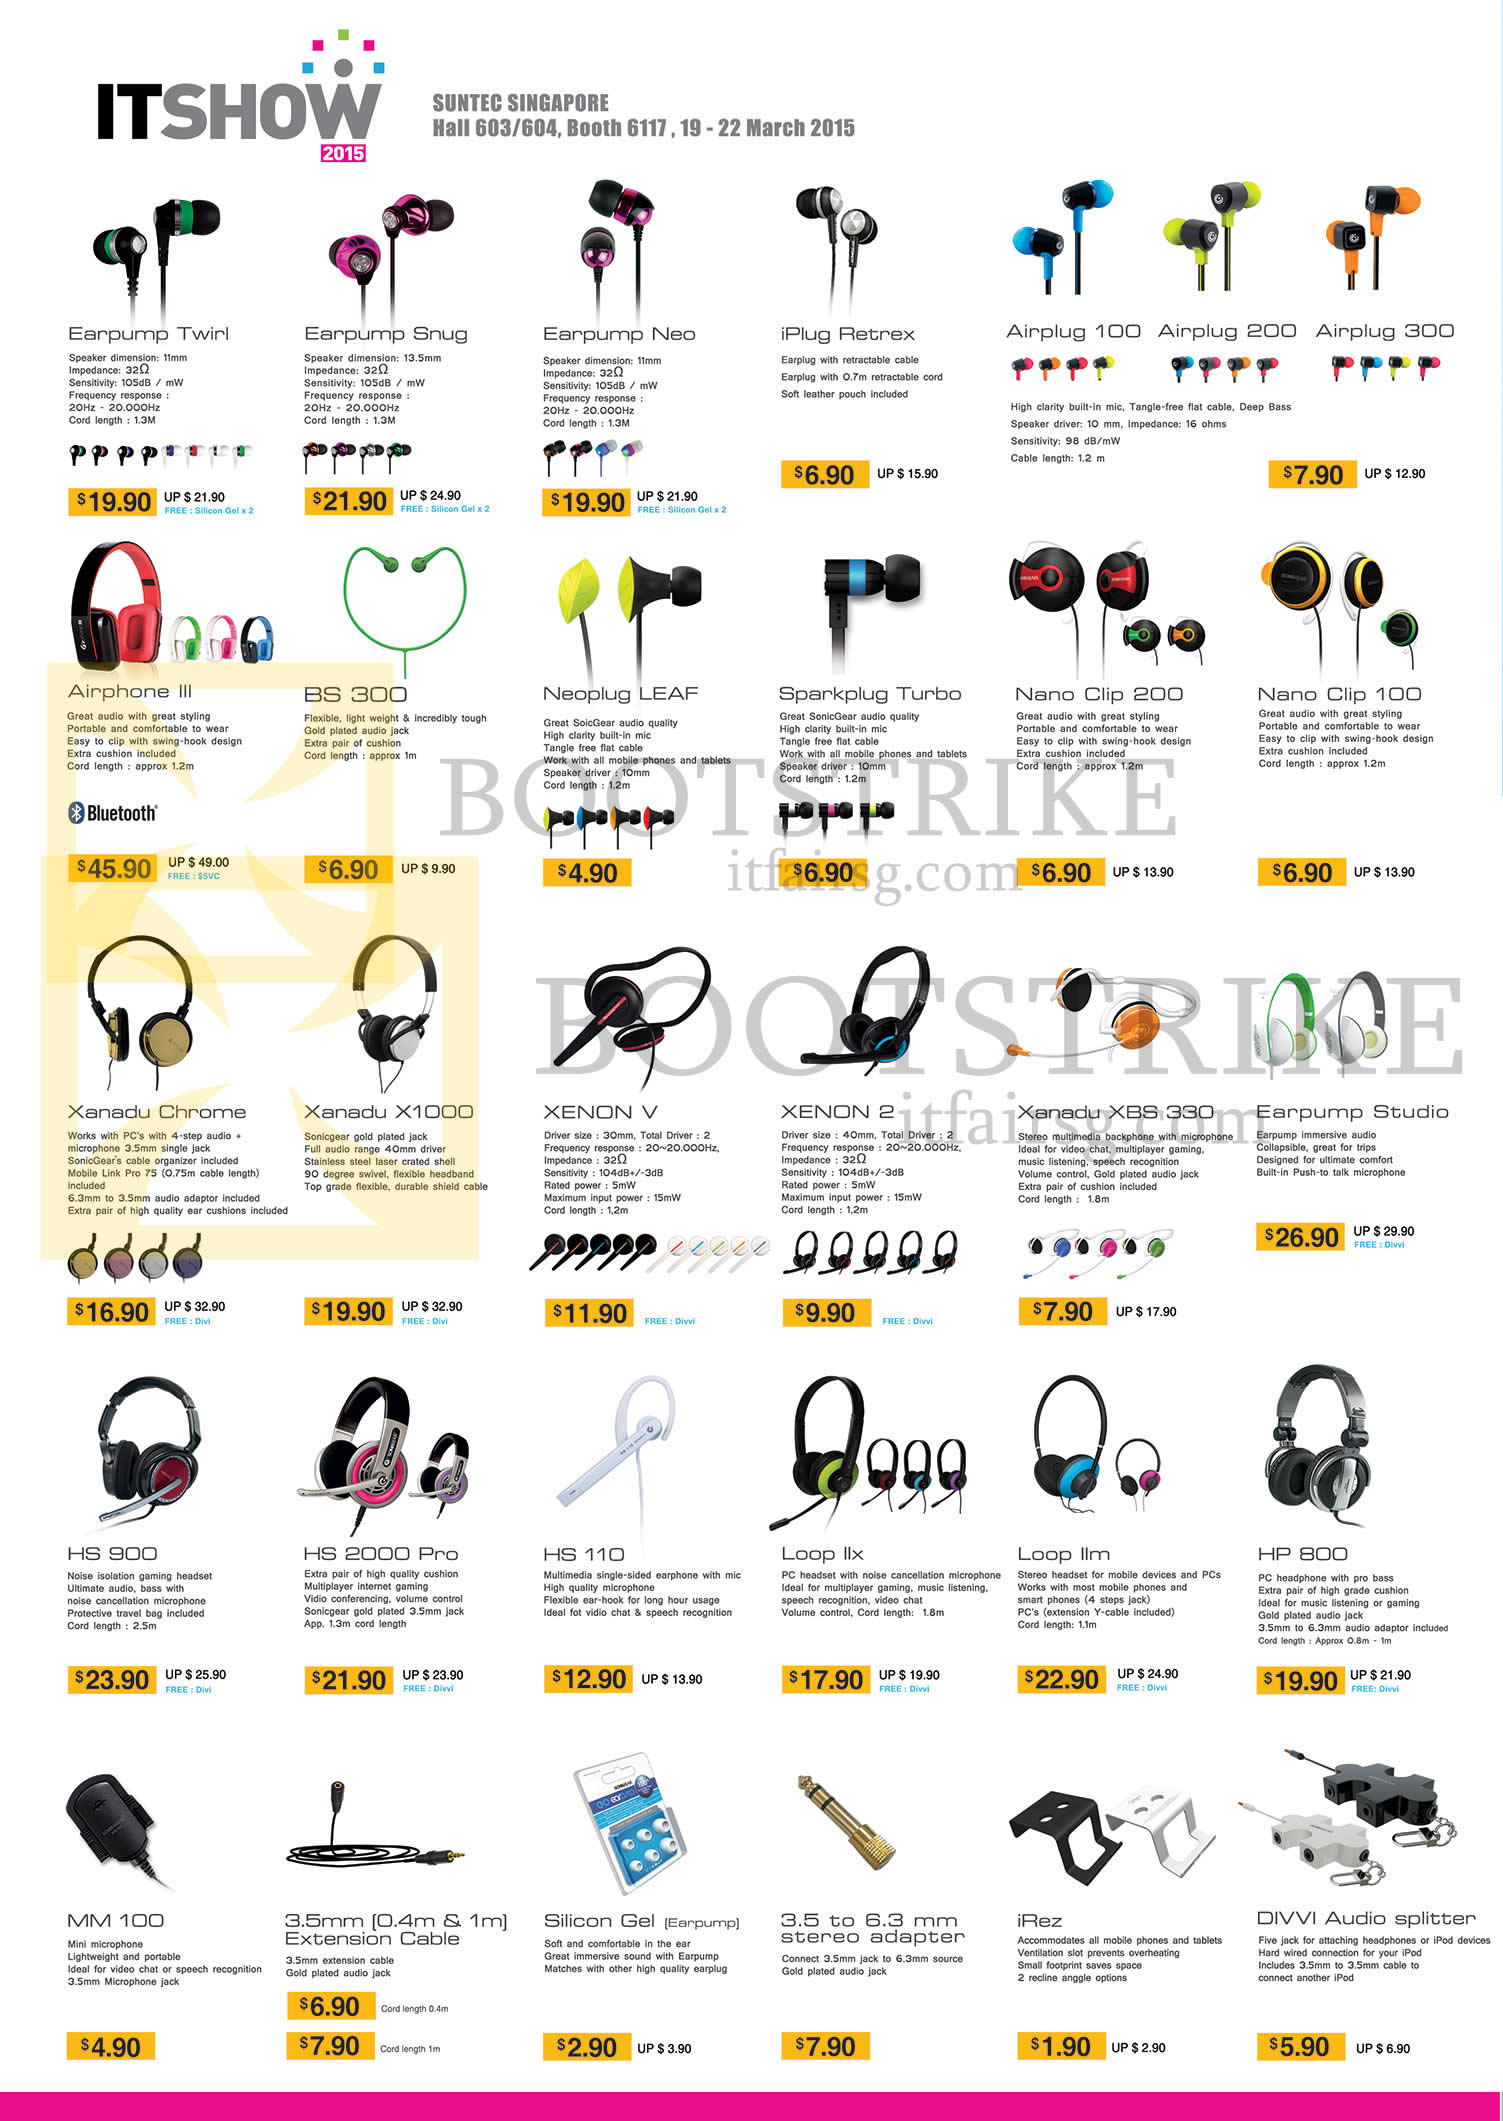 IT SHOW 2015 price list image brochure of Leapfrog SonicGear Earphones, Headphones, Accessories, Earpump Twirl, Brug, Neo, Airphone III, BS 300, Neoplug Leaf, Xanadu Chrome, X1000, Xenon V, HS 900, 2000Pro, HS110